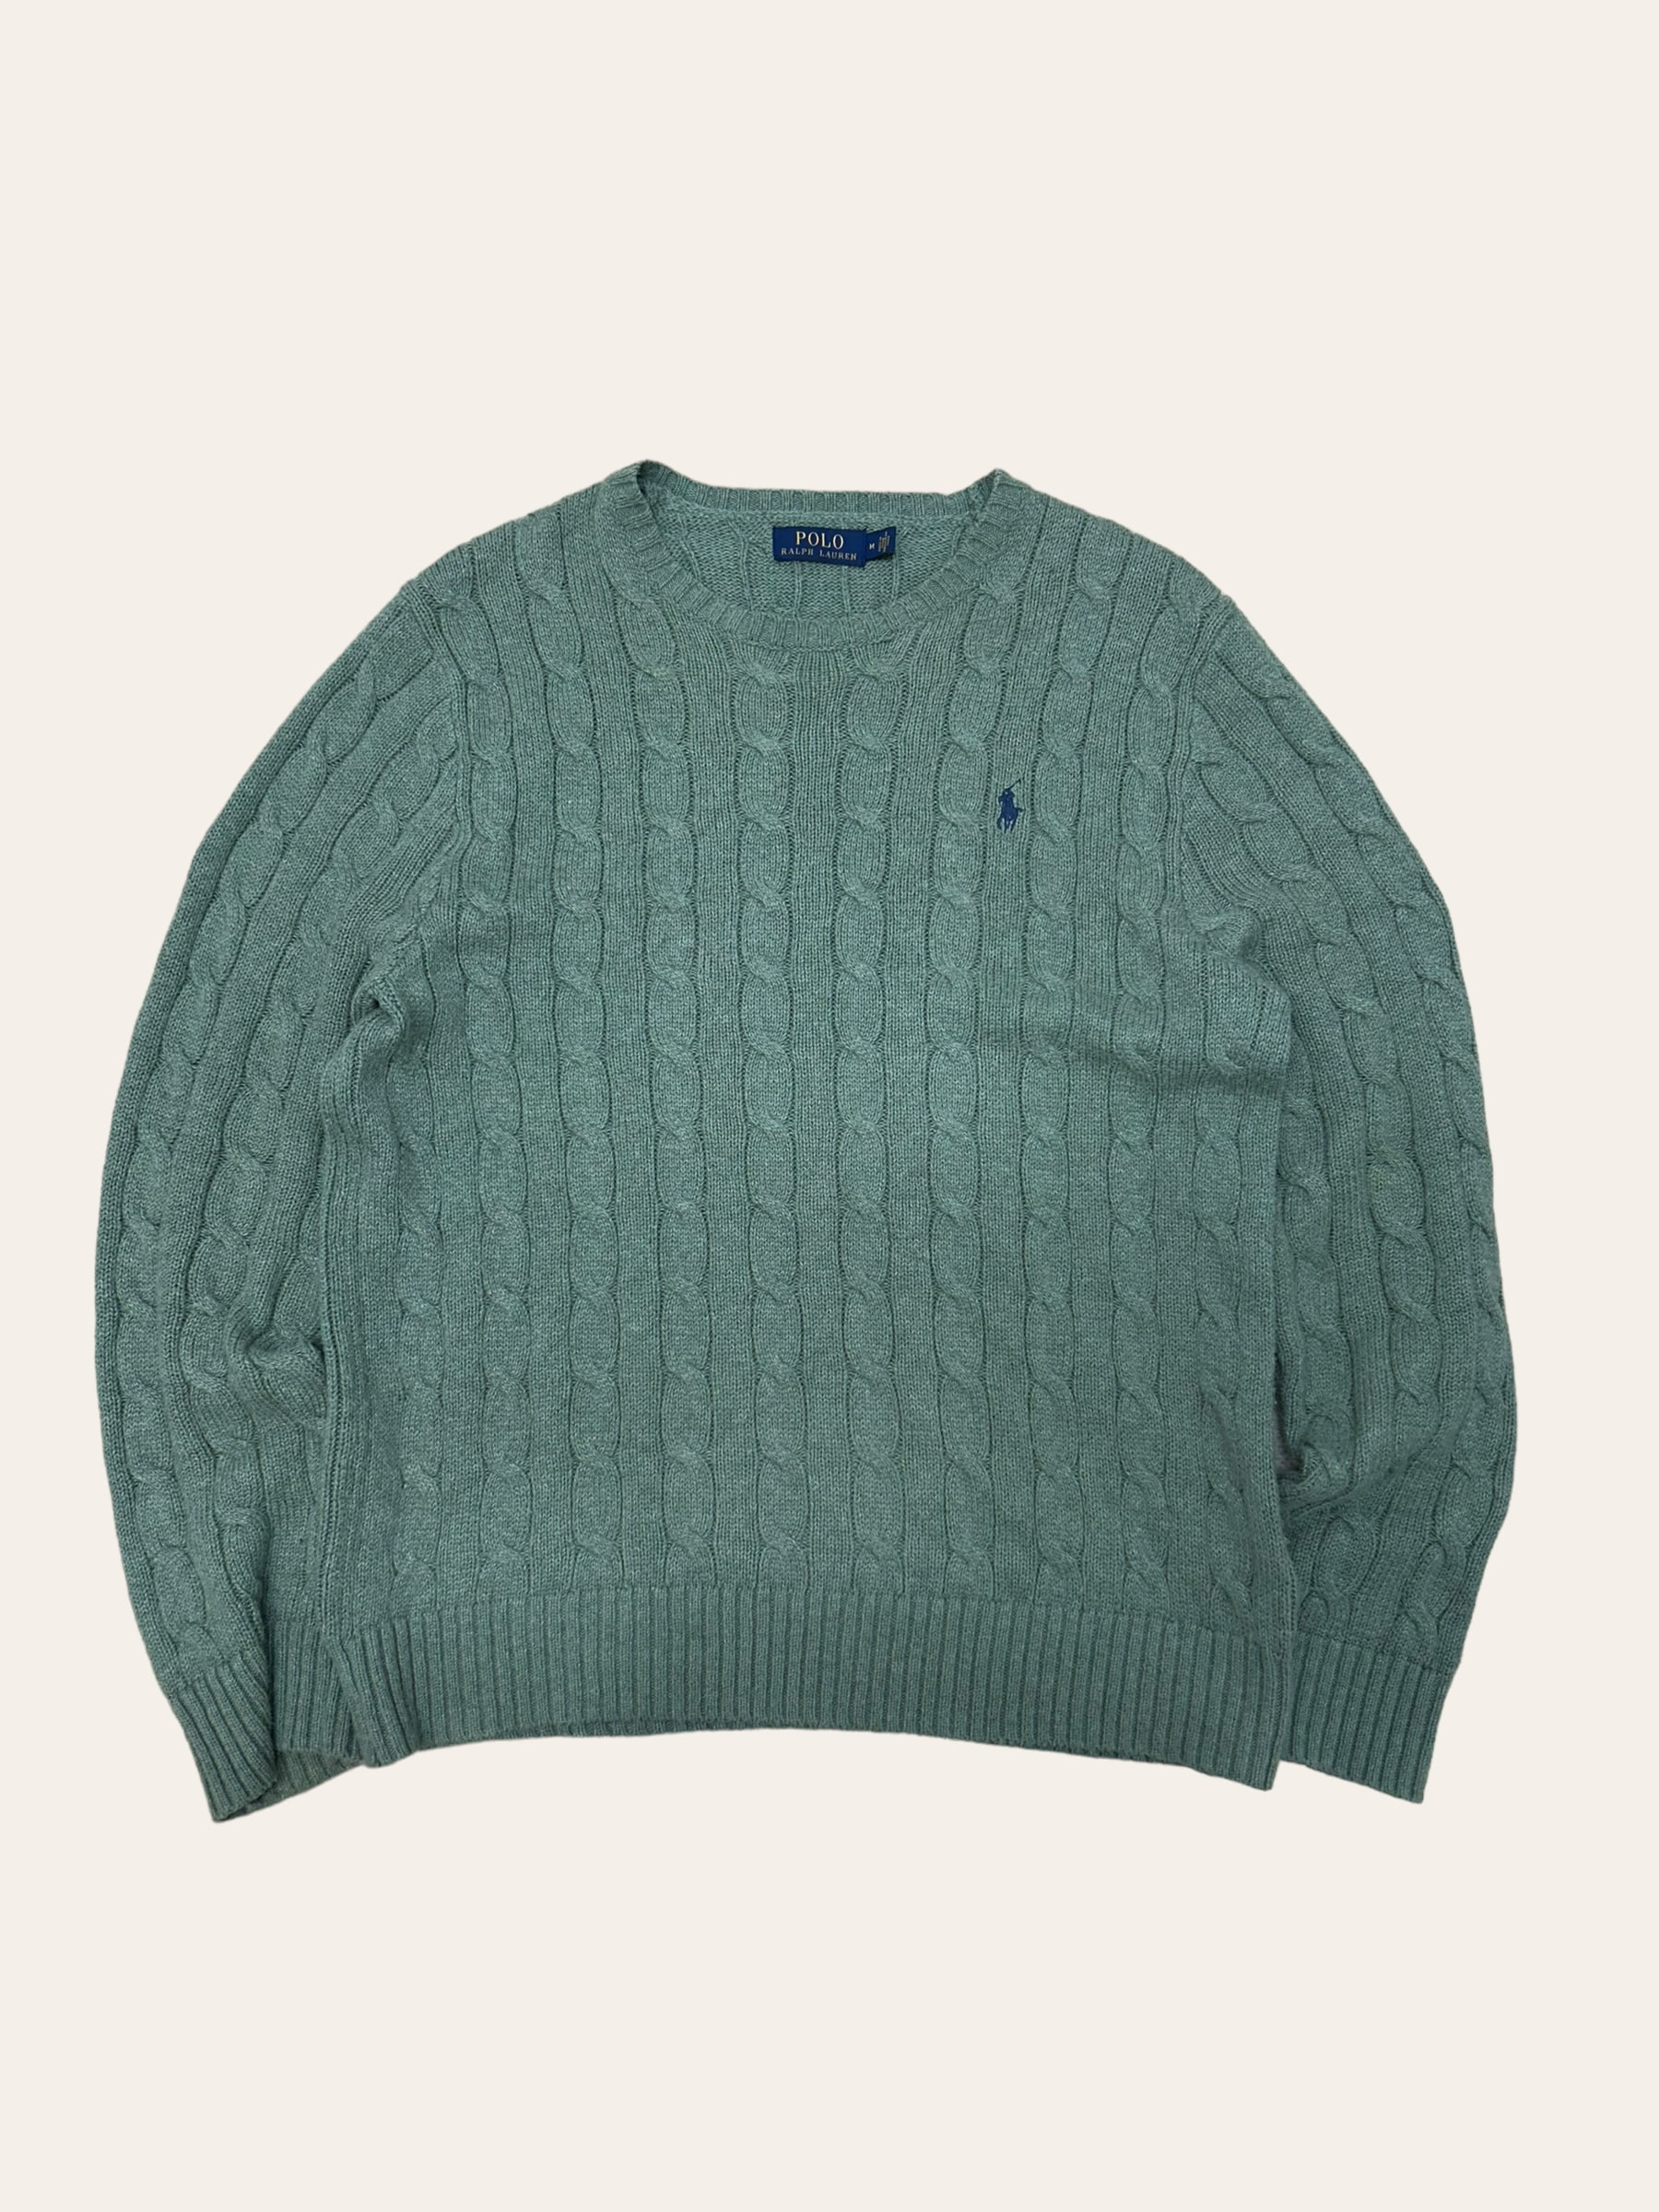 Polo ralph lauren emerald color cable cotton sweater M